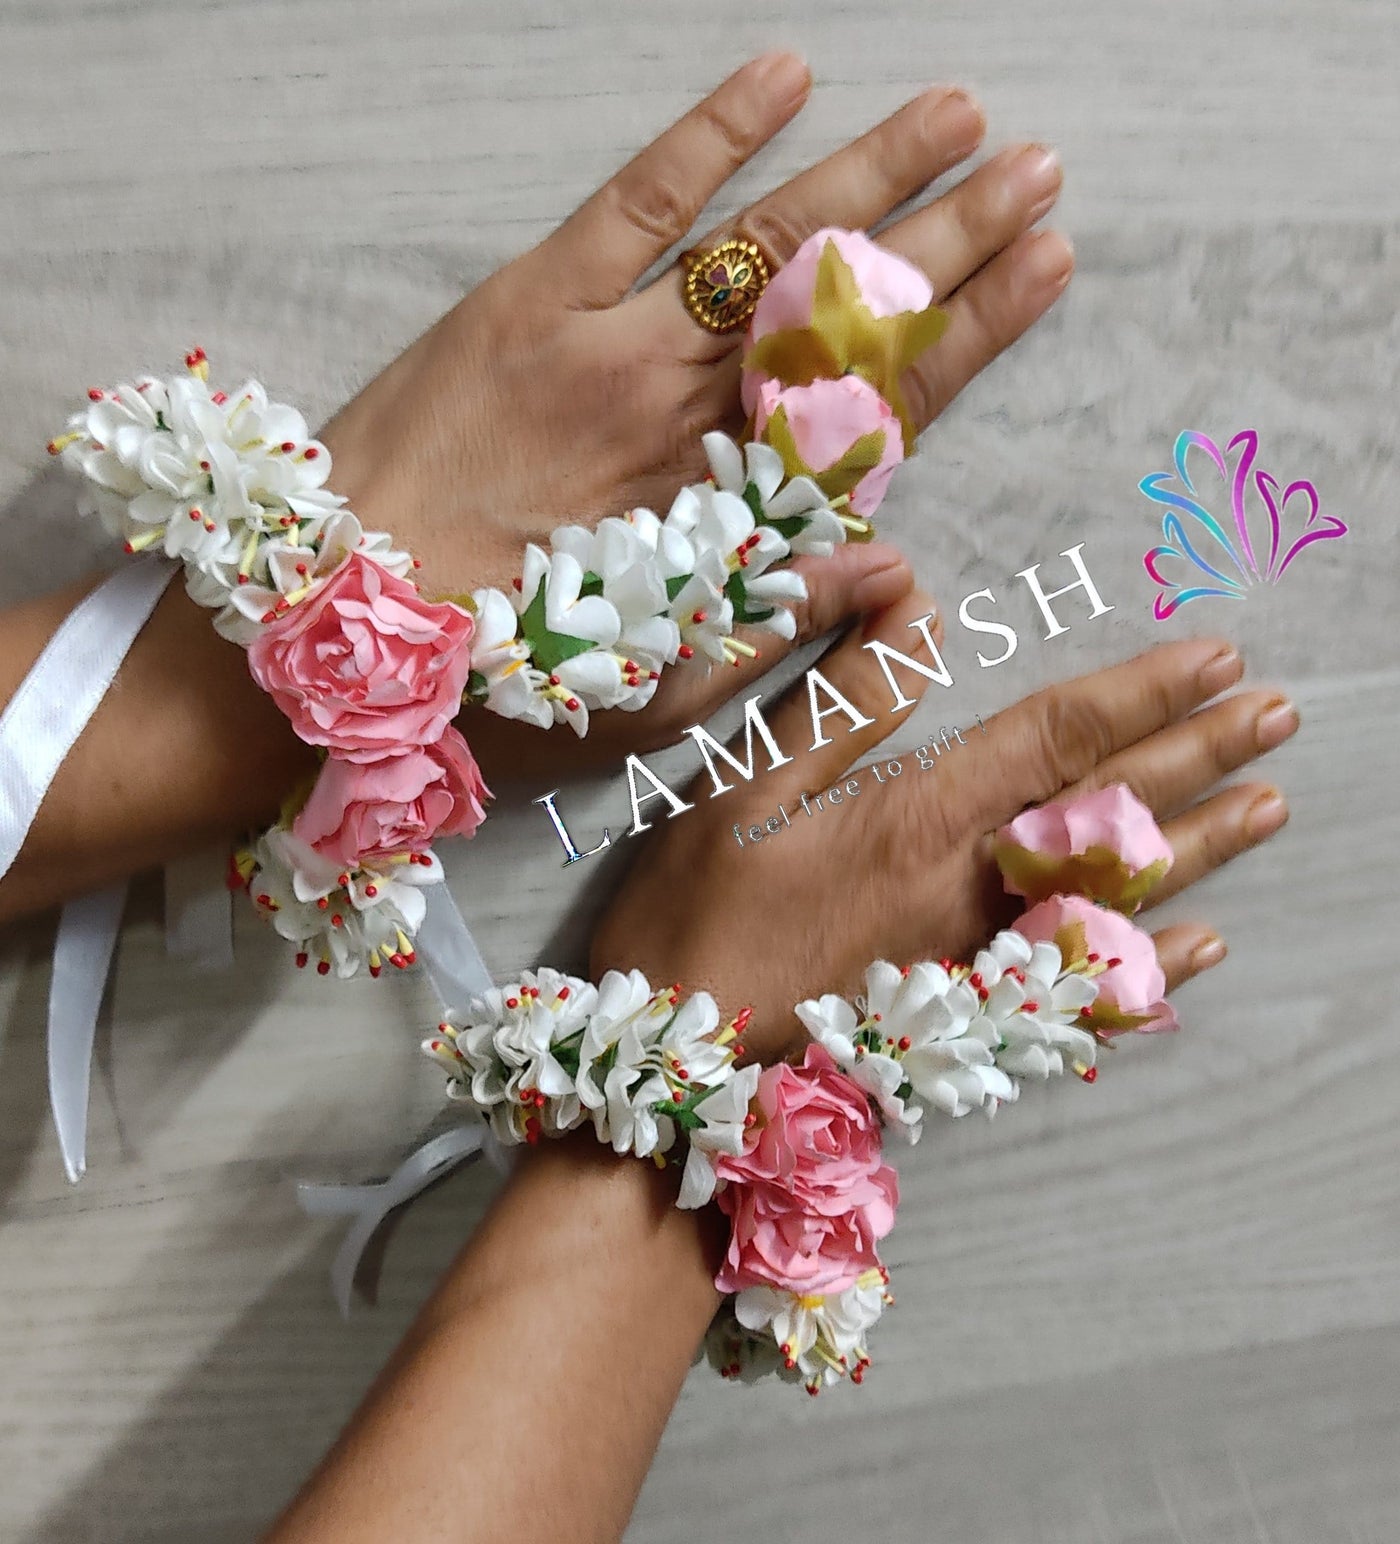 Lamansh Earrings, Bracelets & Maangtika 2 Earrings, 2 Bracelets attached to Ring & 1 Maangtika / Pink LAMANSH® Latest Style Floral 🌺 Jewellery set for Haldi / Bridal Flower Jewellery Set